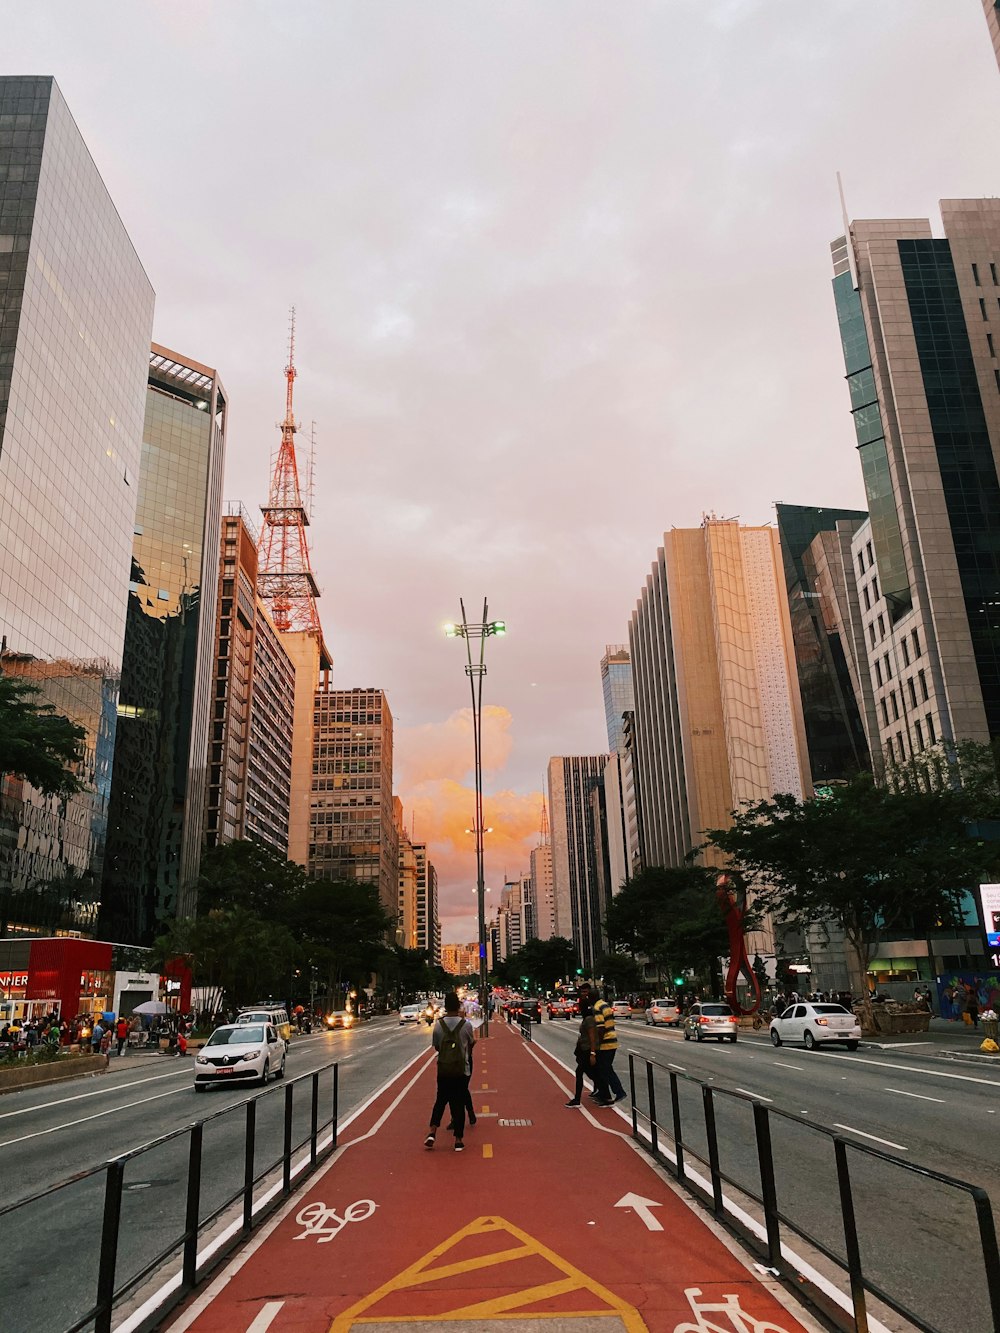 Avenida Paulista Pictures  Download Free Images on Unsplash